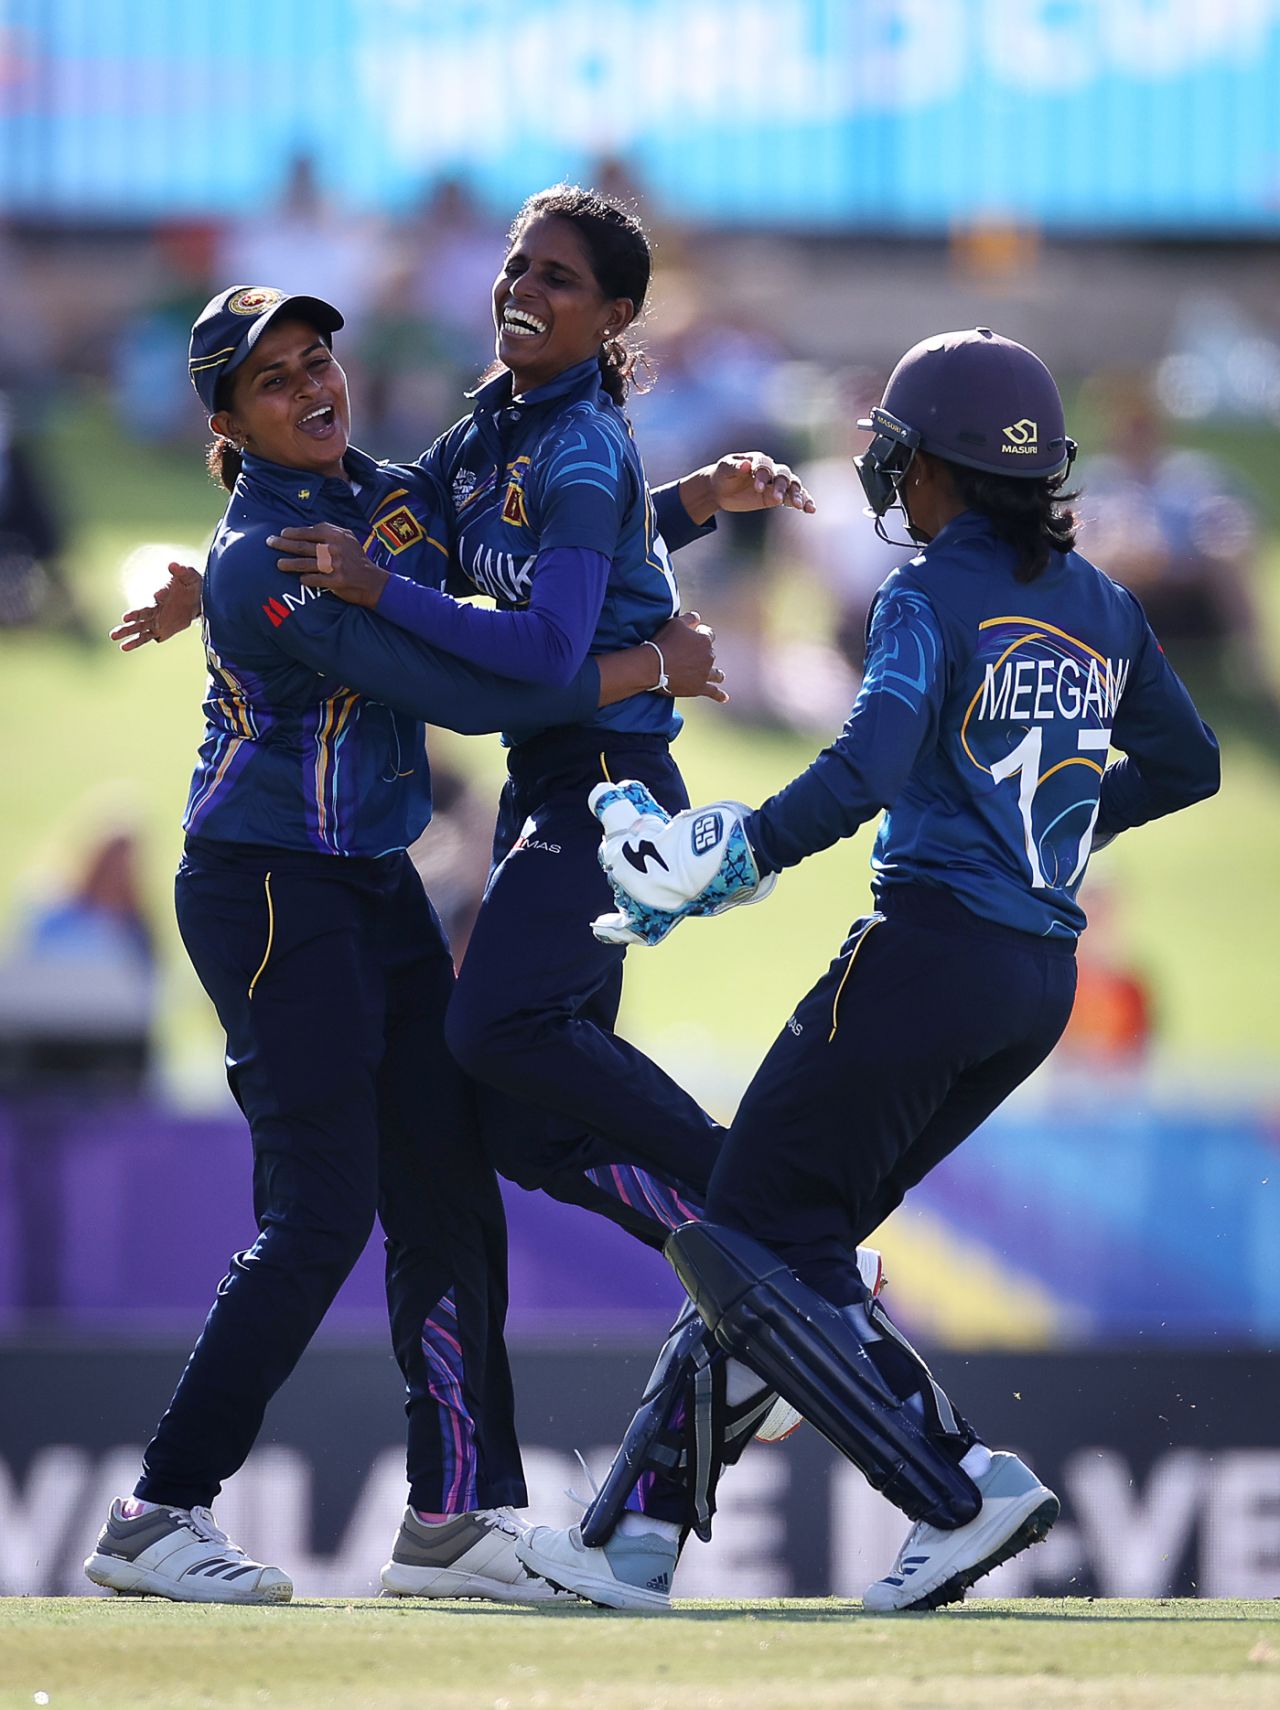 Udeshika Prabodhani celebrates after a wicket in her new-ball burst, Australia v Sri Lanka, Women's T20 World Cup, Group A, Perth, February 24, 2020